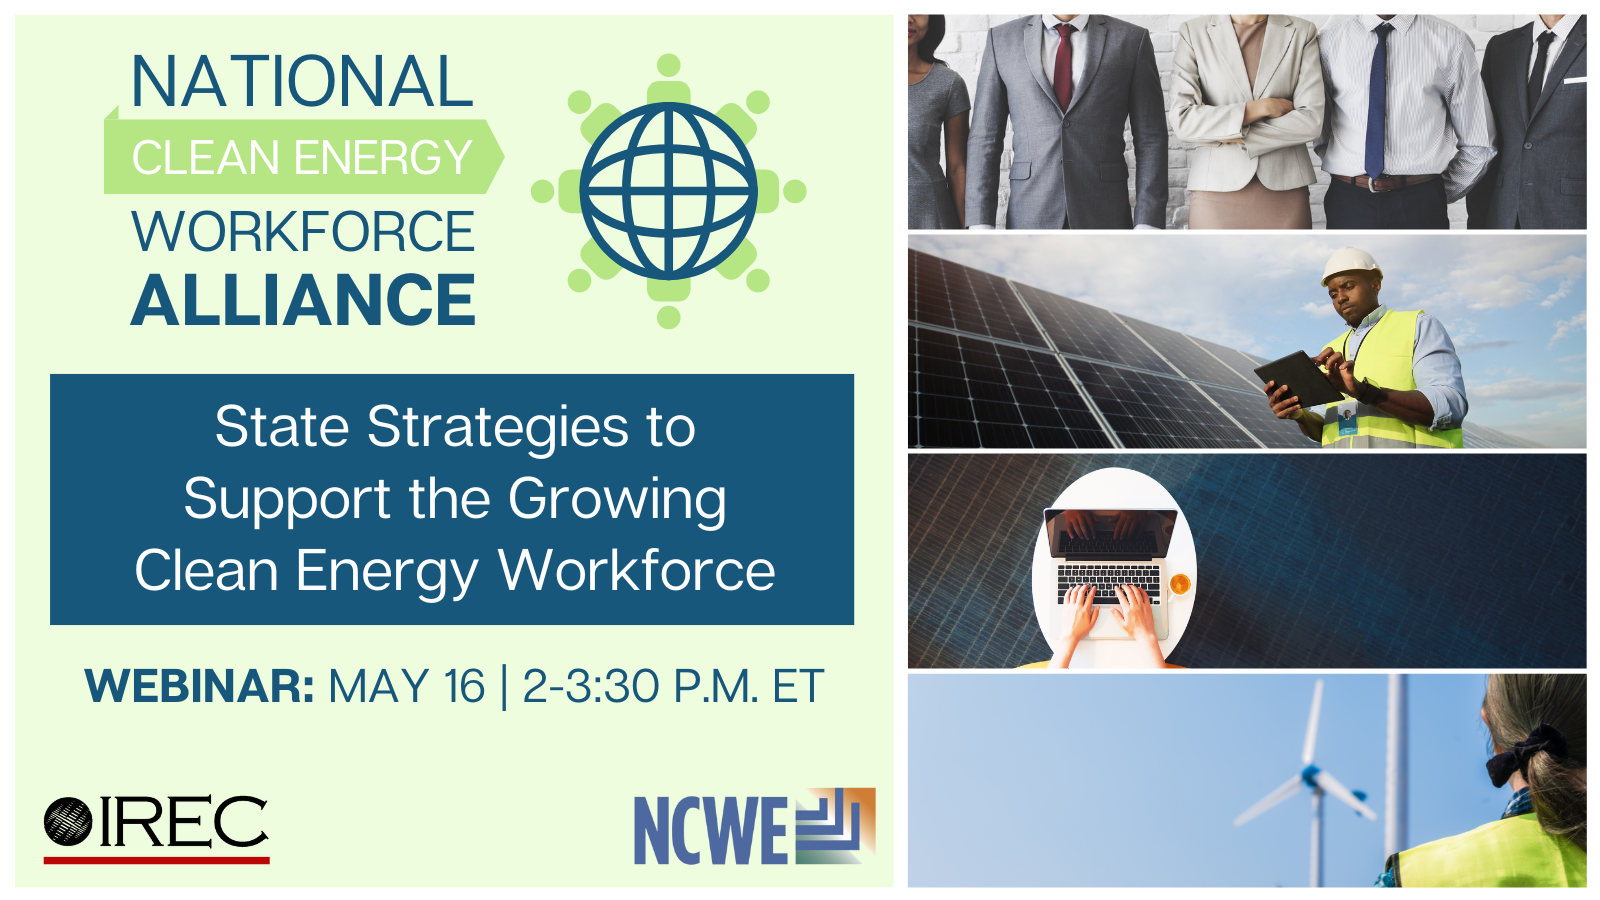 National Clean Energy Workforce Alliance: State Strategies to Support the Growing Clean Energy Workforce Webinar